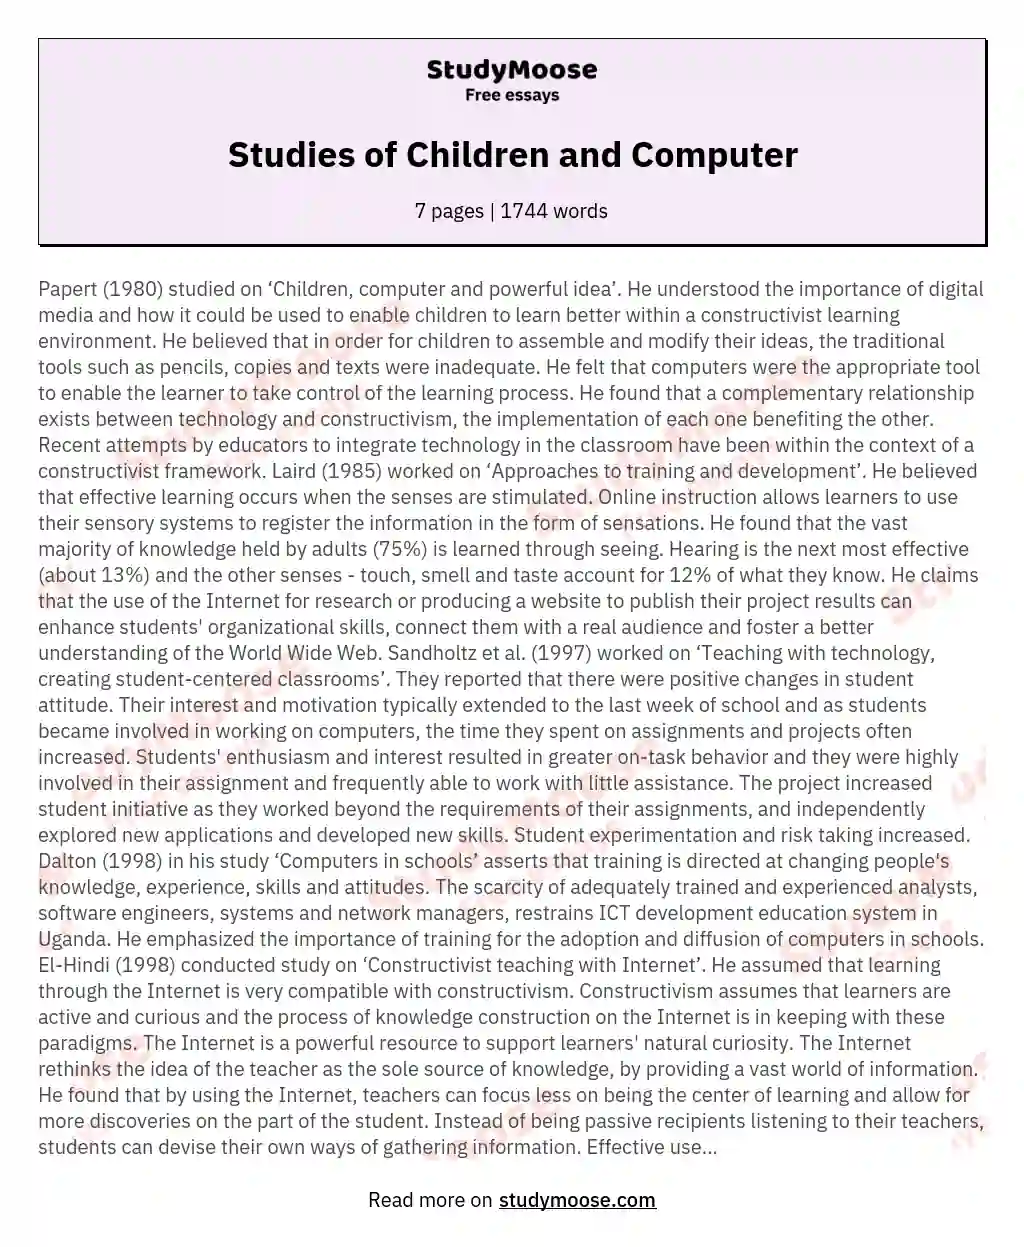 Studies of Children and Computer essay